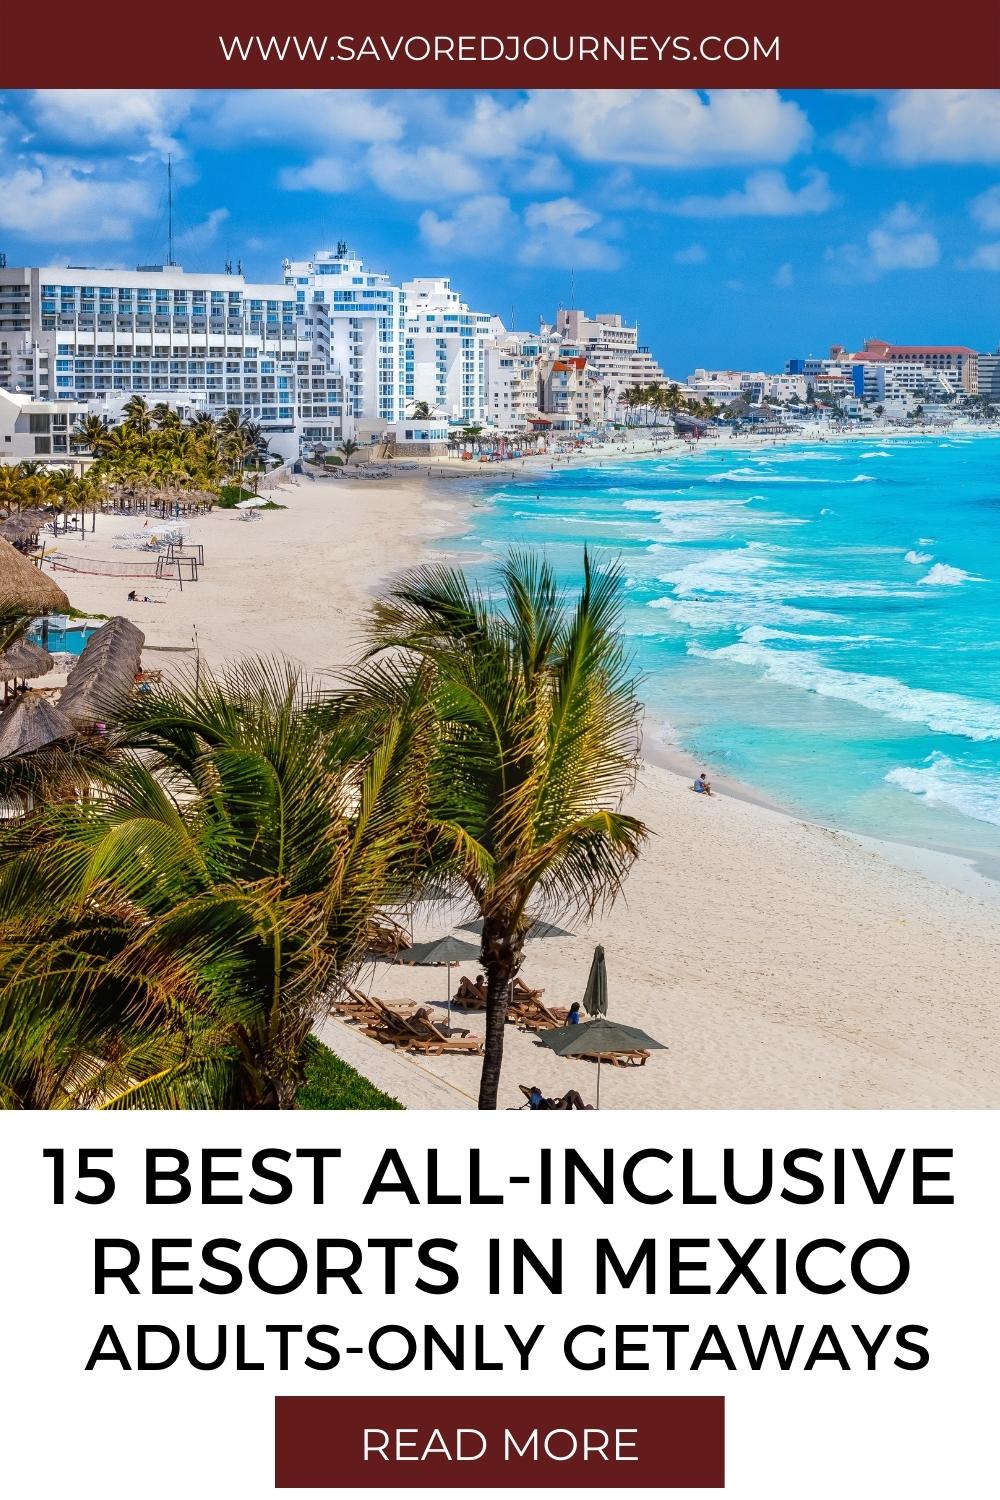 15 All-Inclusive Resorts in Mexico